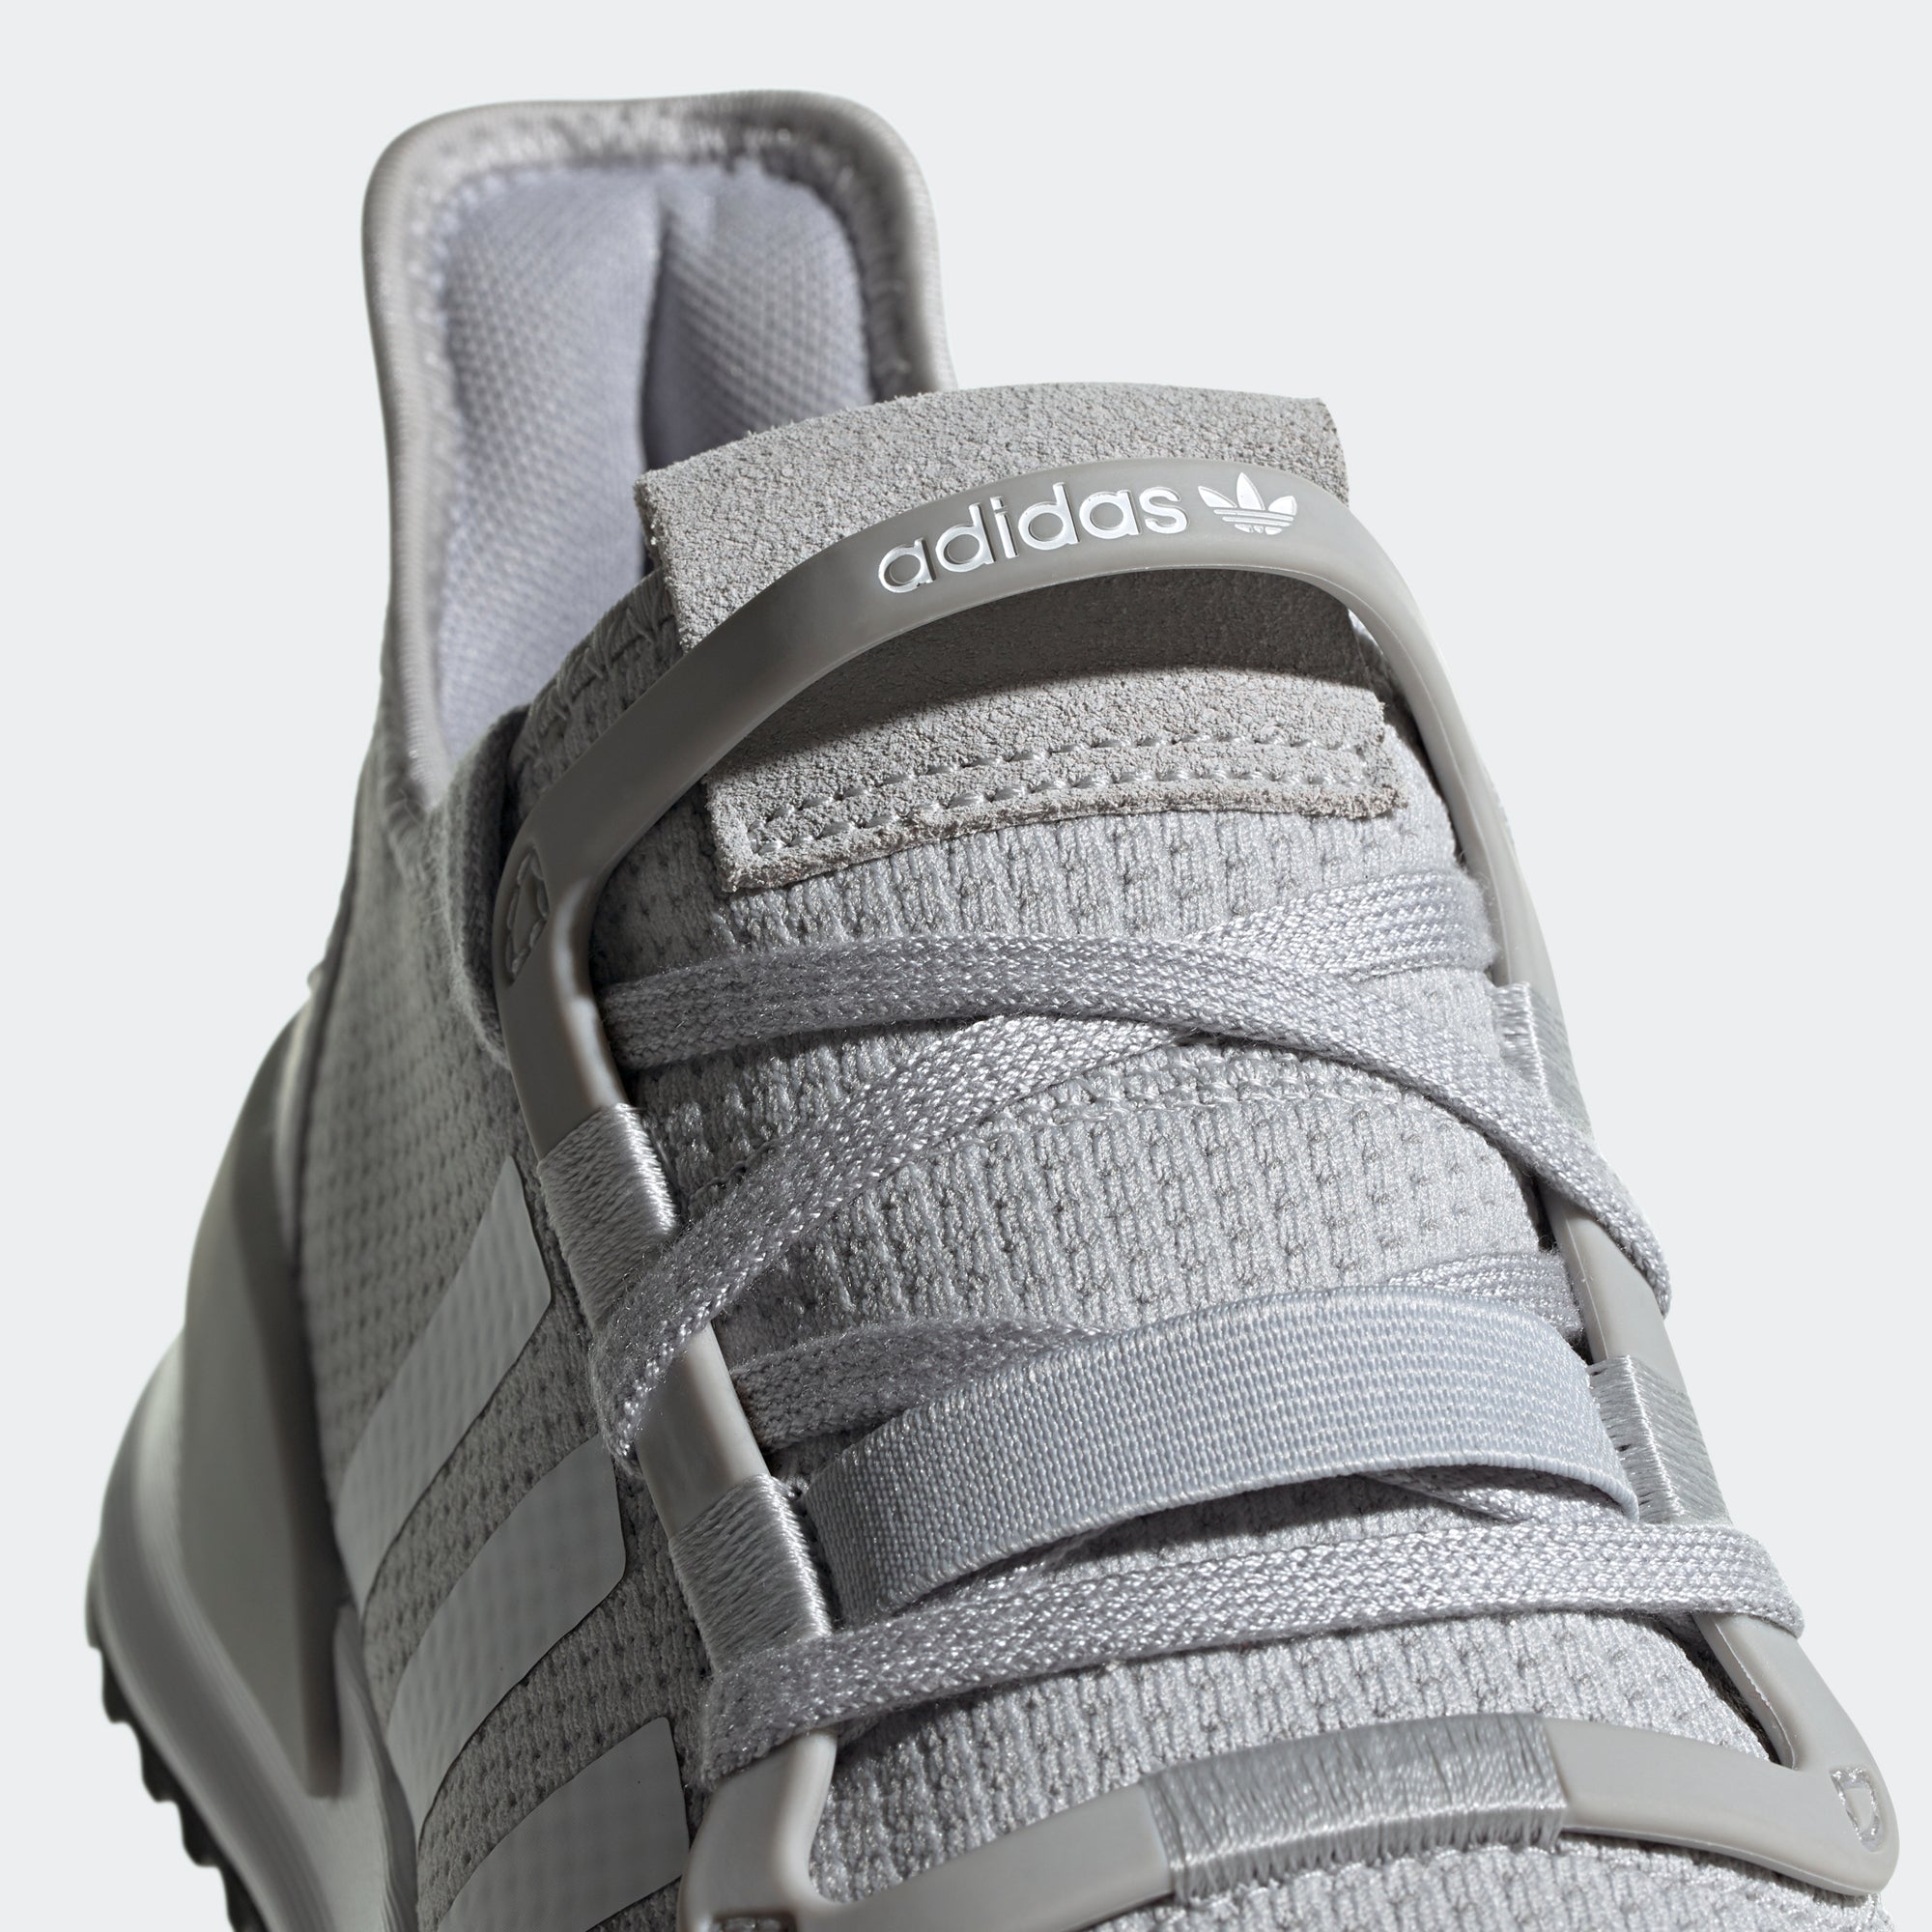 women's light gray adidas shoes